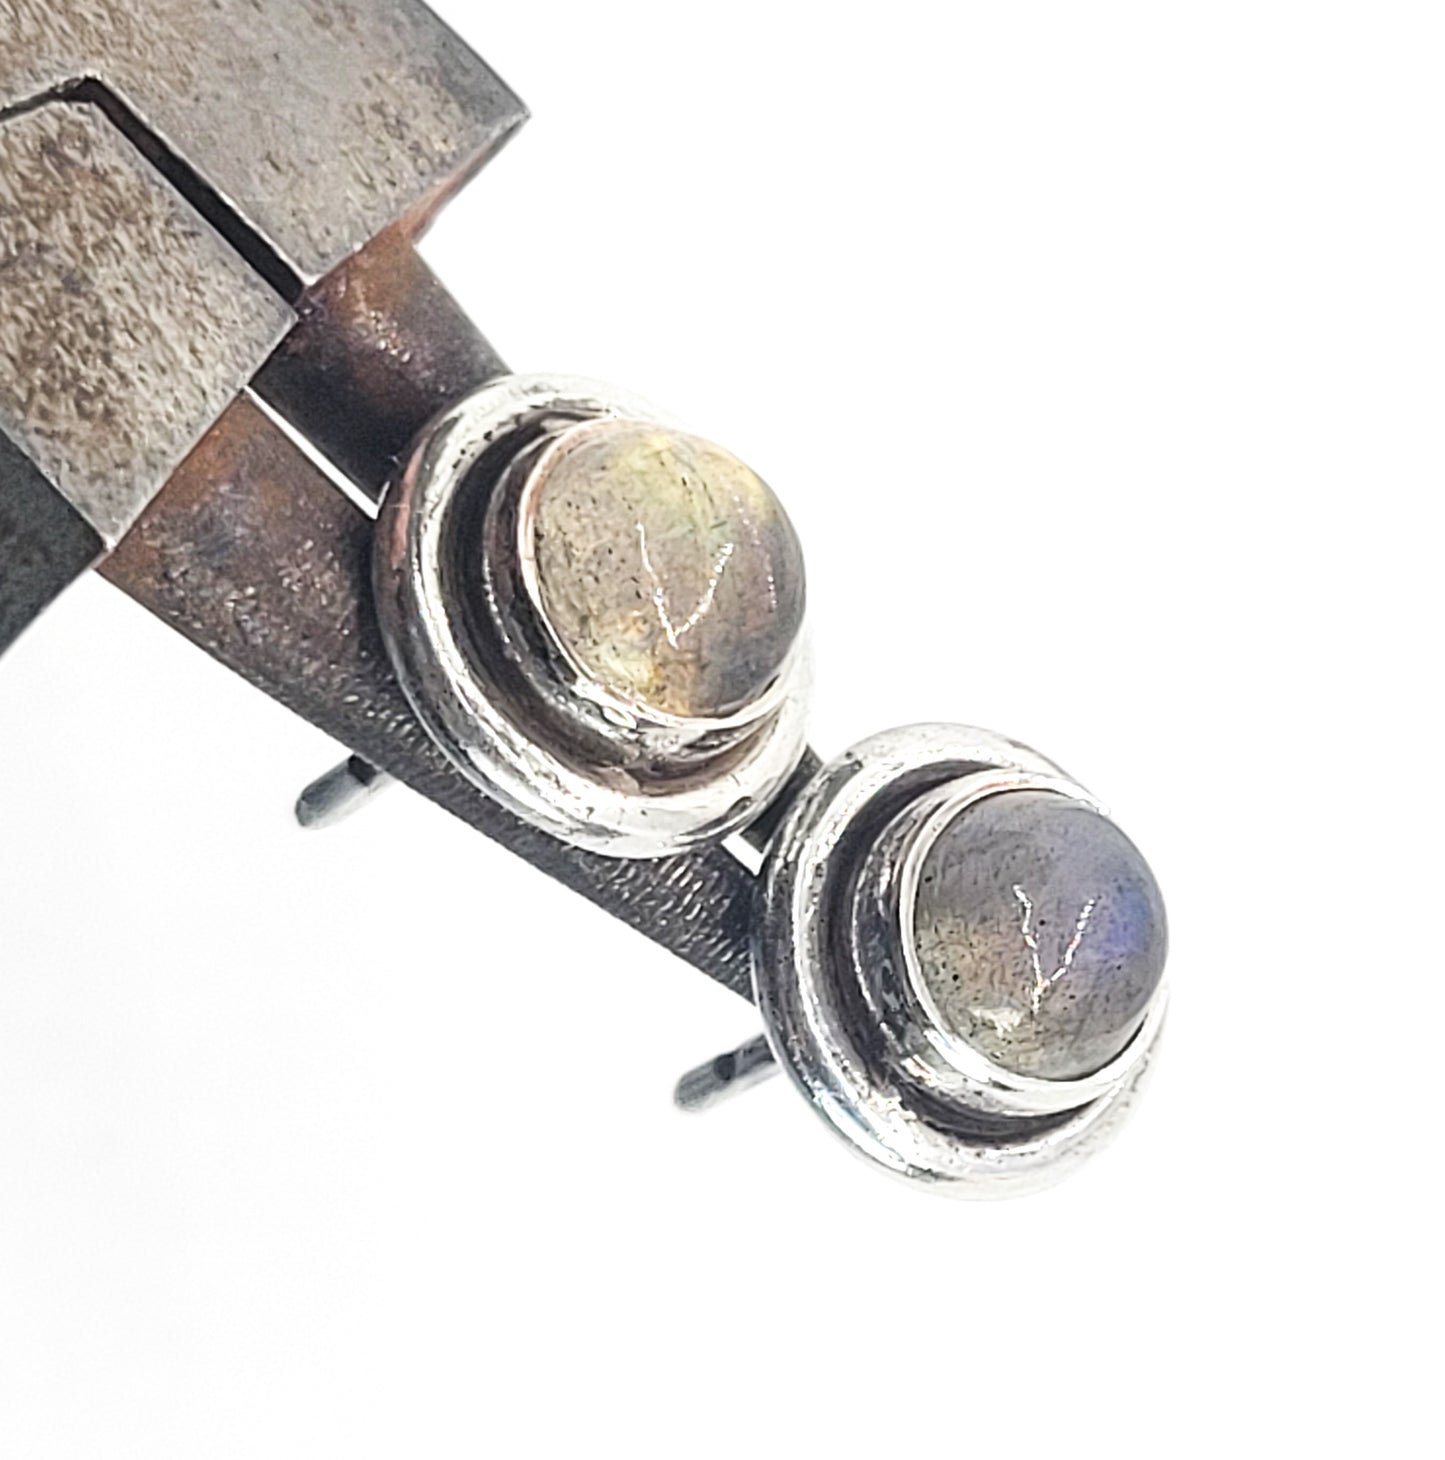 Labradorite vintage shadow box sterling silver stud earrings